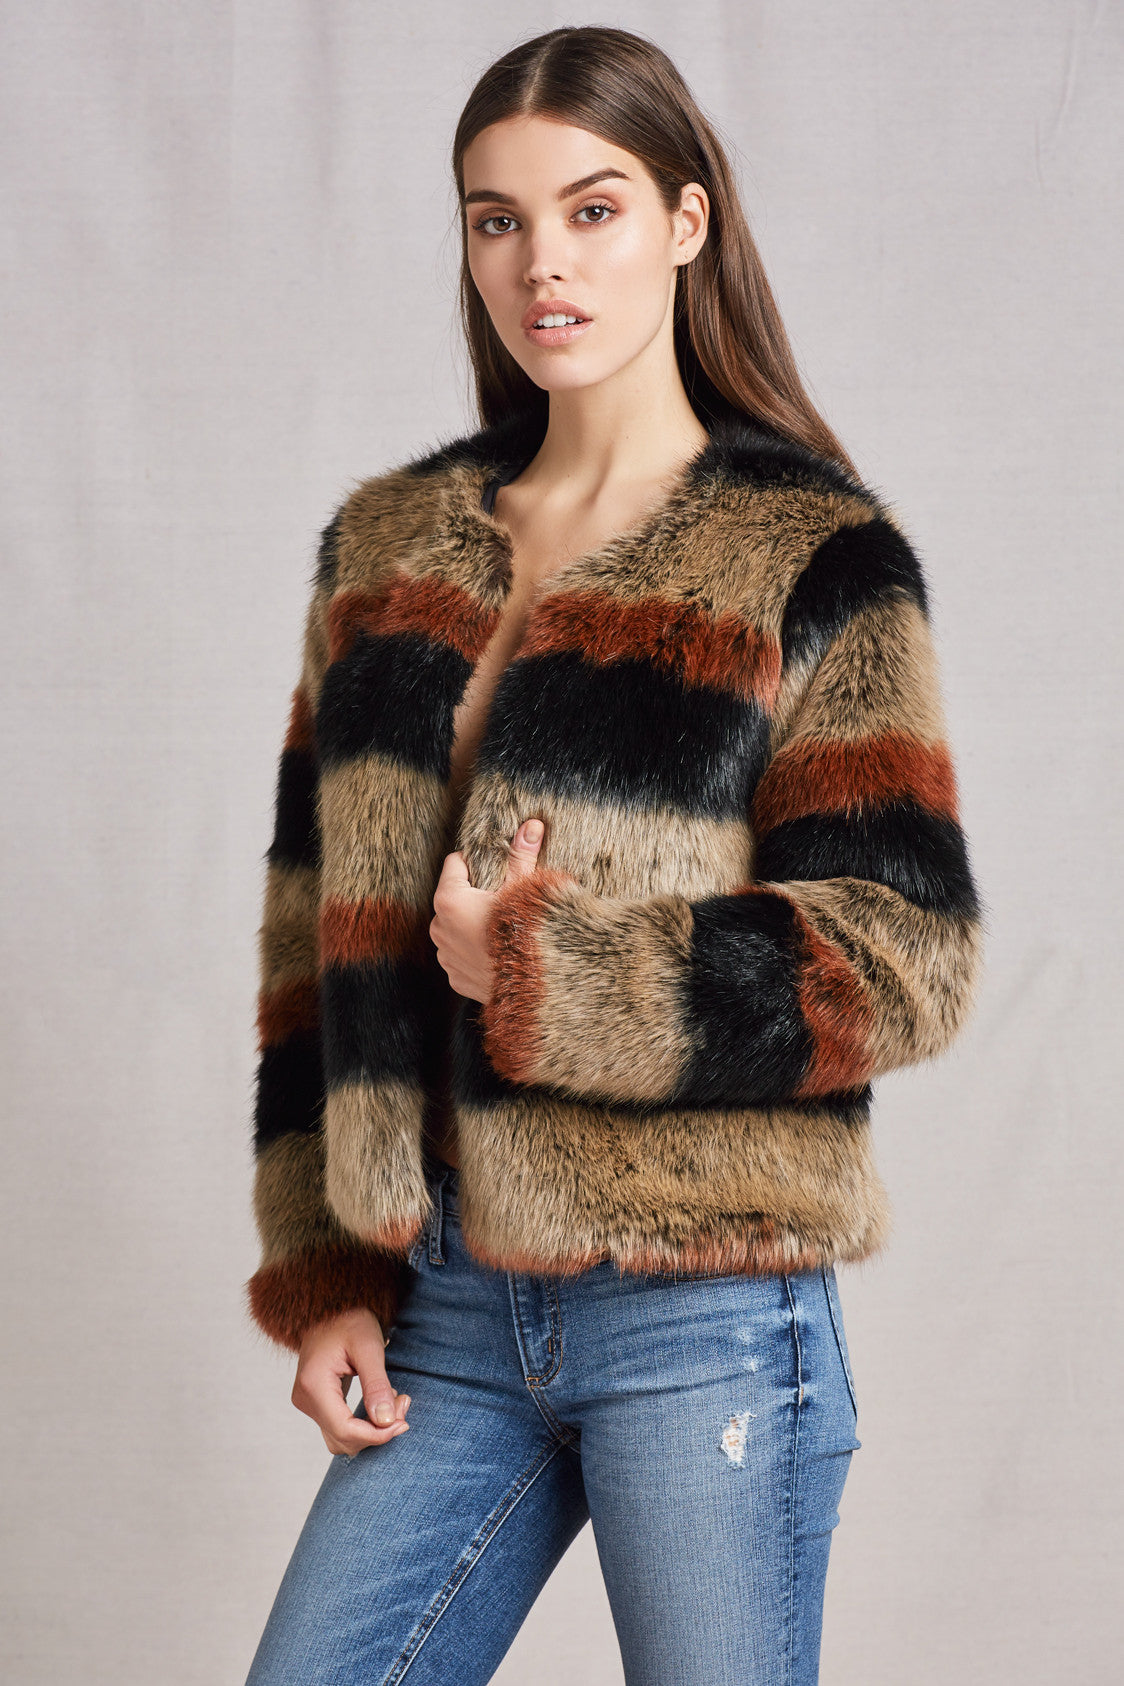 Harkin Fur Jacket in Multi 70s Stripe – TULAROSA (a Revolve Group company)